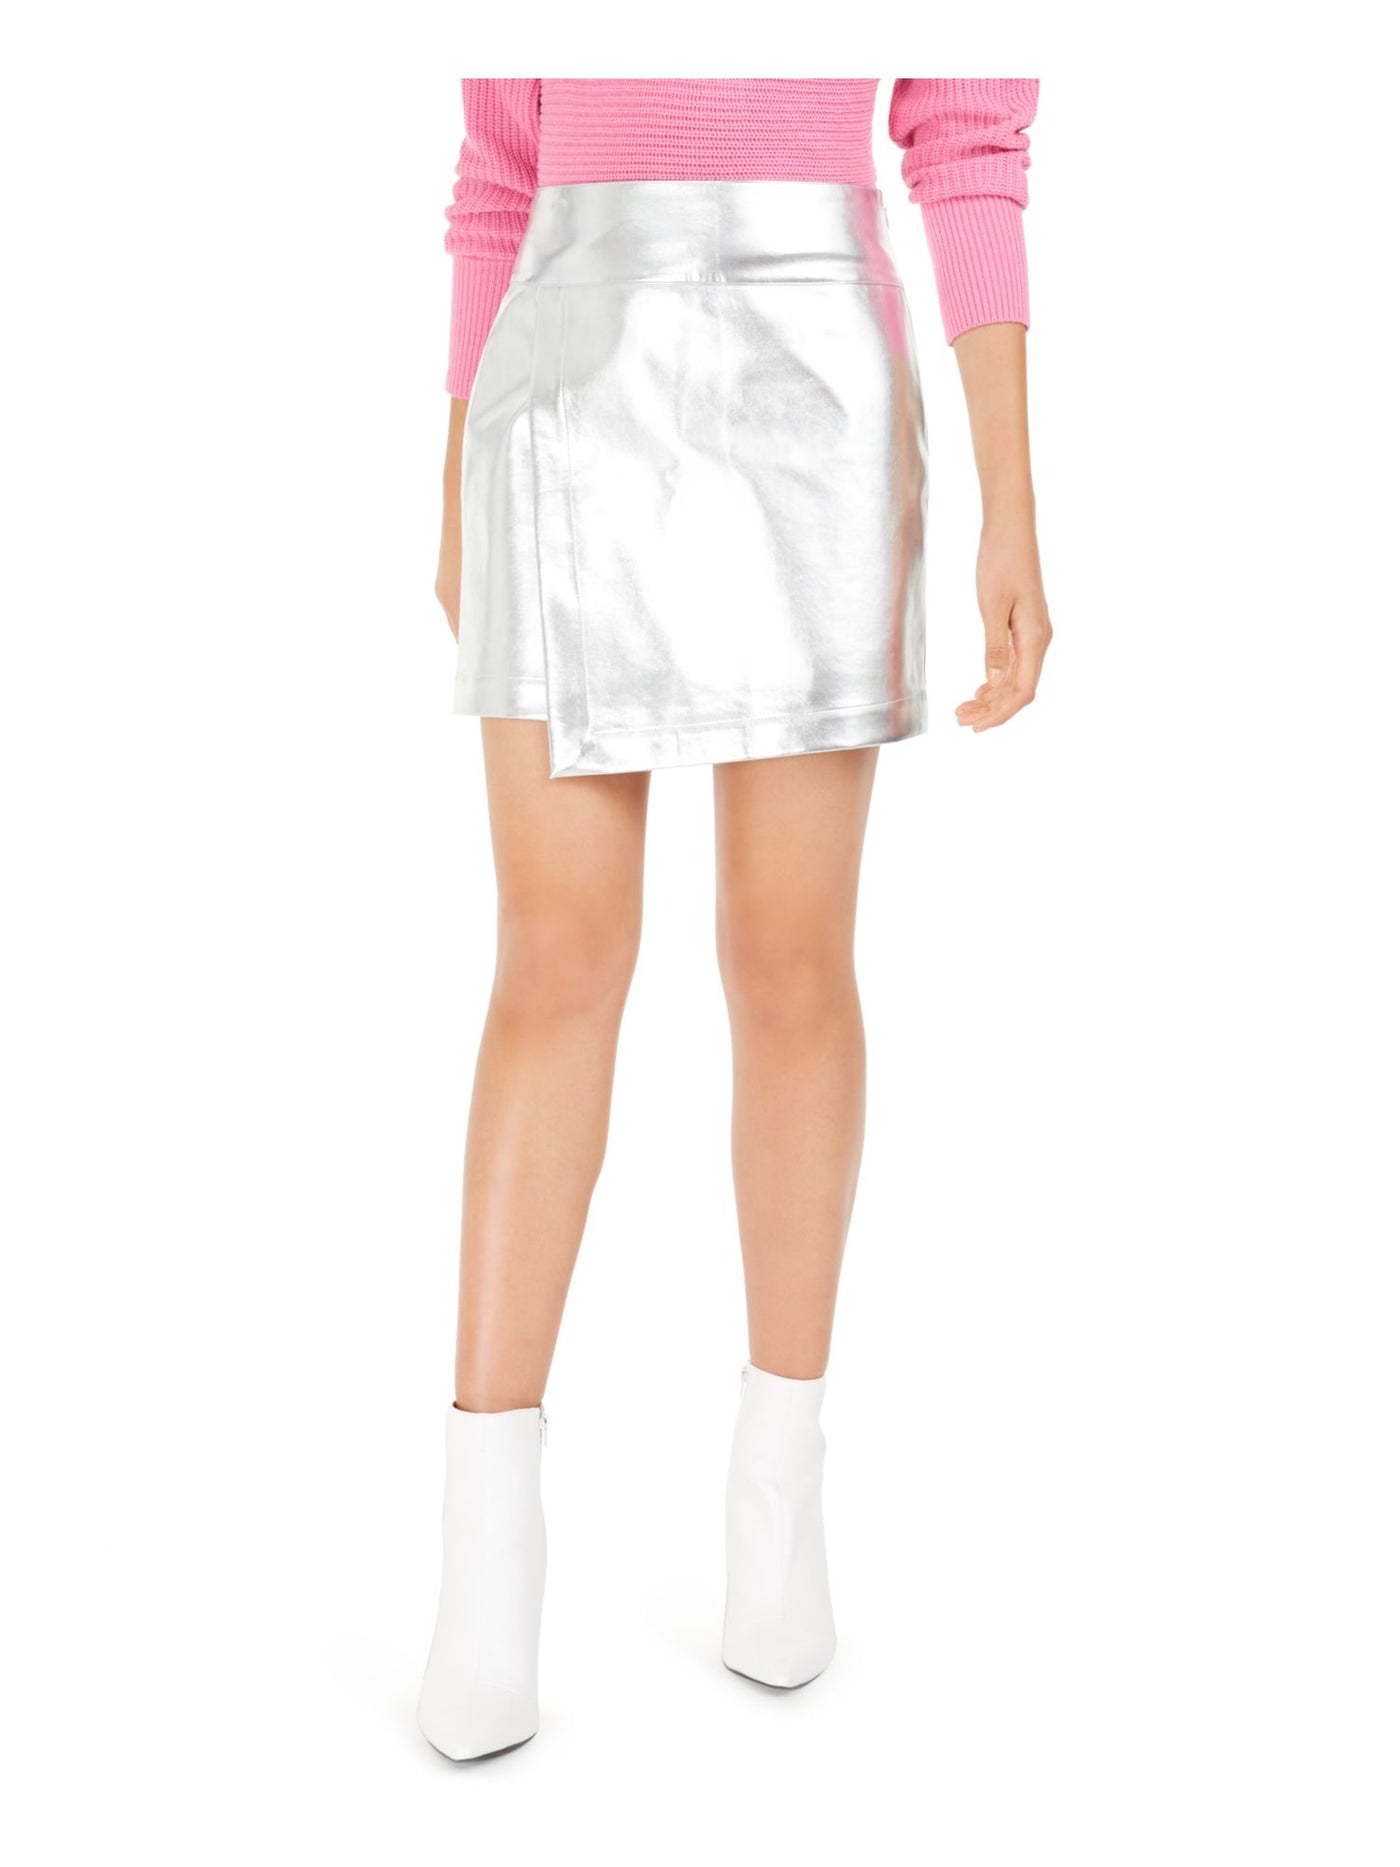 BAR III Womens Silver Mini Pencil Party Skirt Size: XS